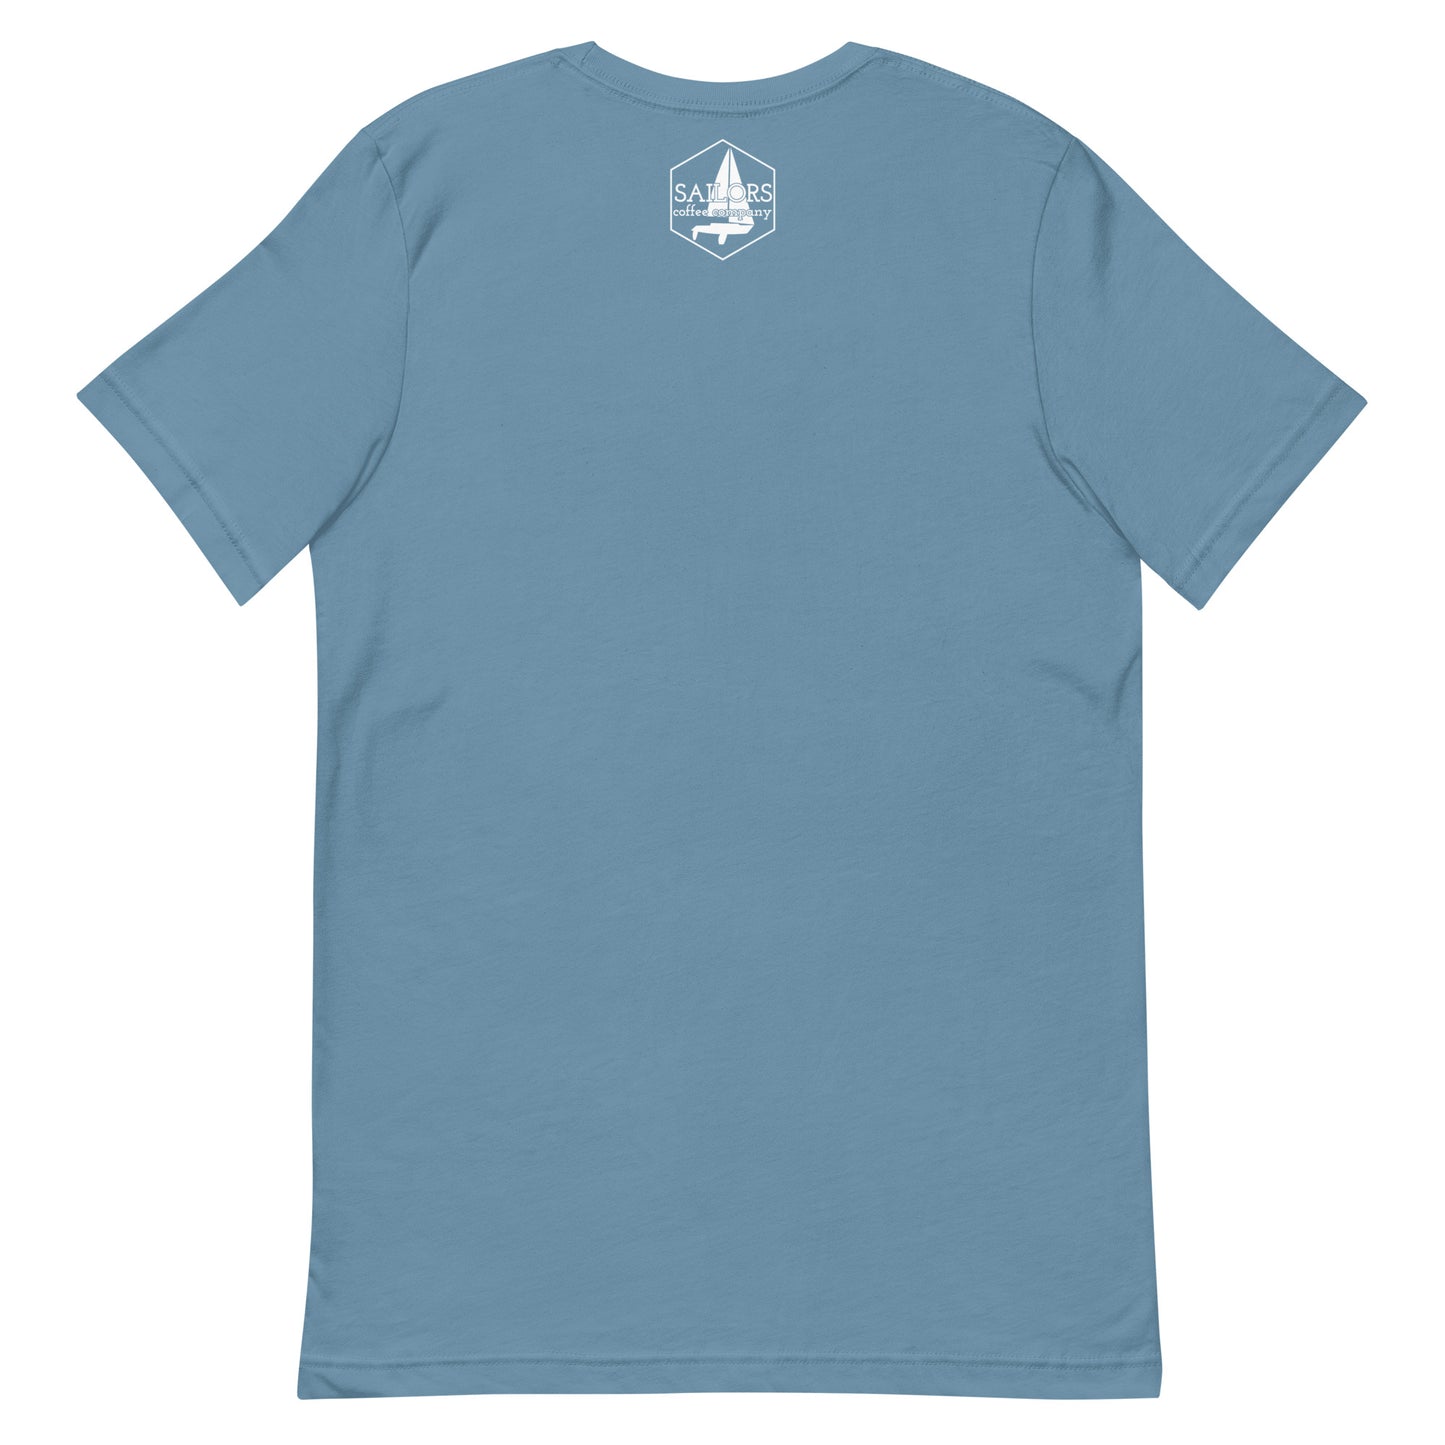 Unisex t-shirt (Crew Member)